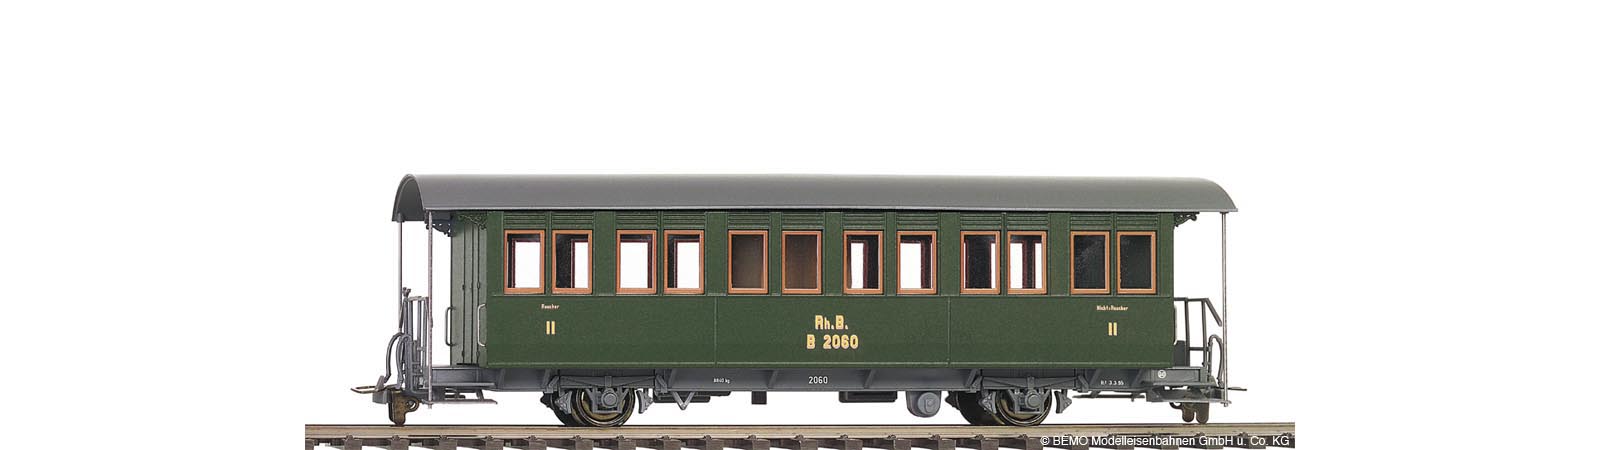 RhB B2060 2-achser historisch Dampfzug